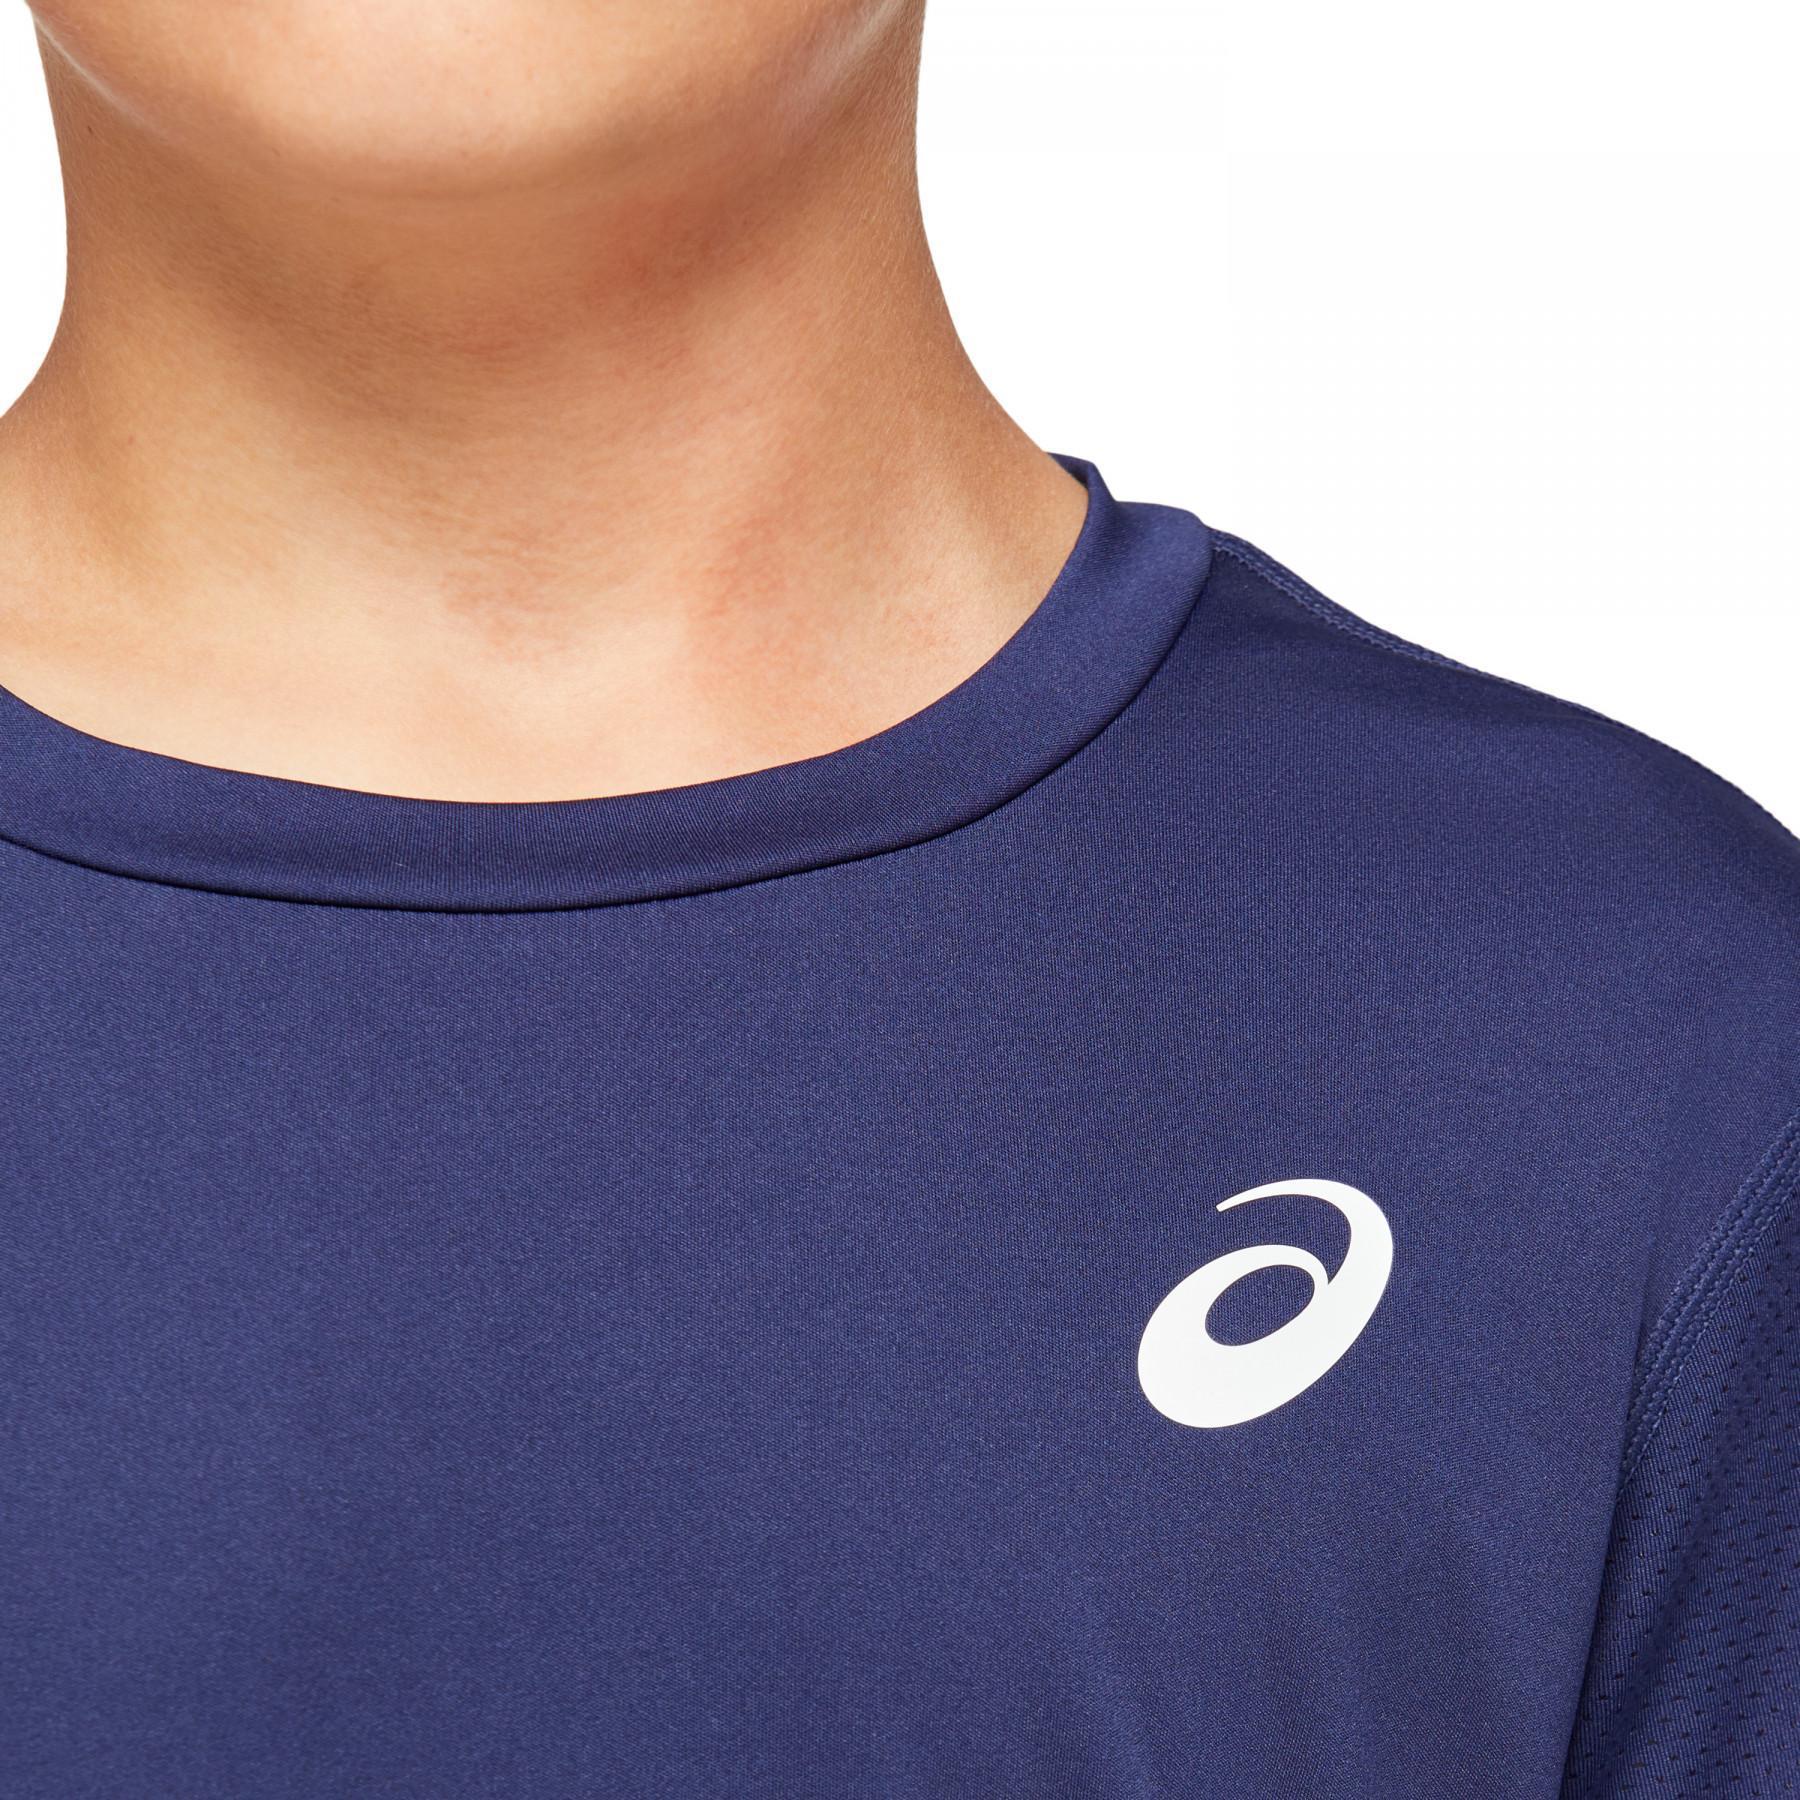 Kinder-T-Shirt Asics Tennis Club